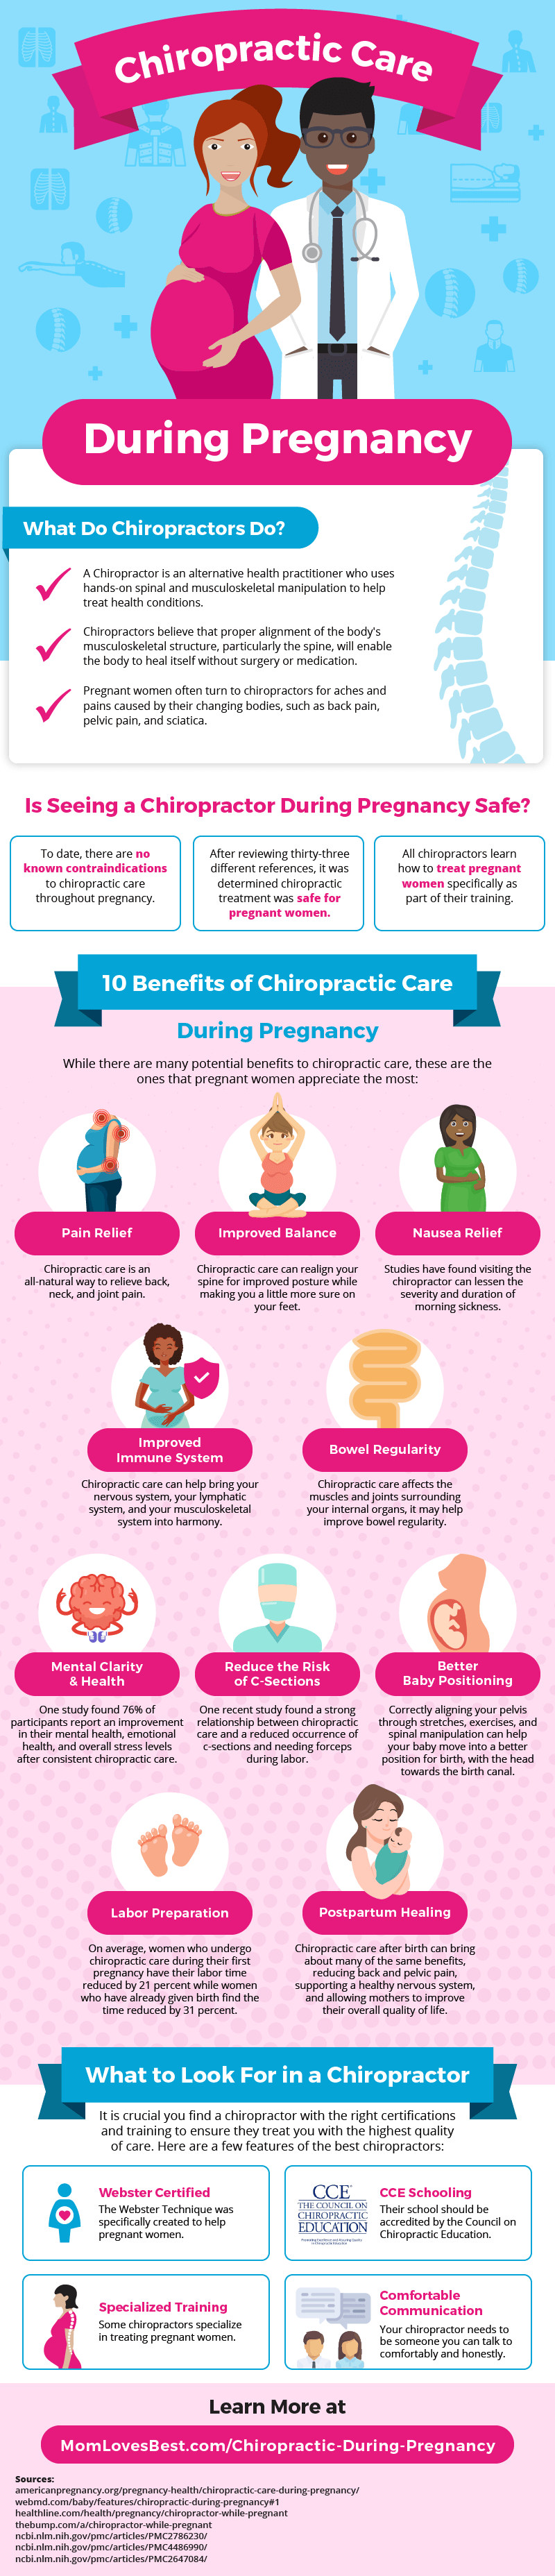 Chiropractic During Pregnancy 1